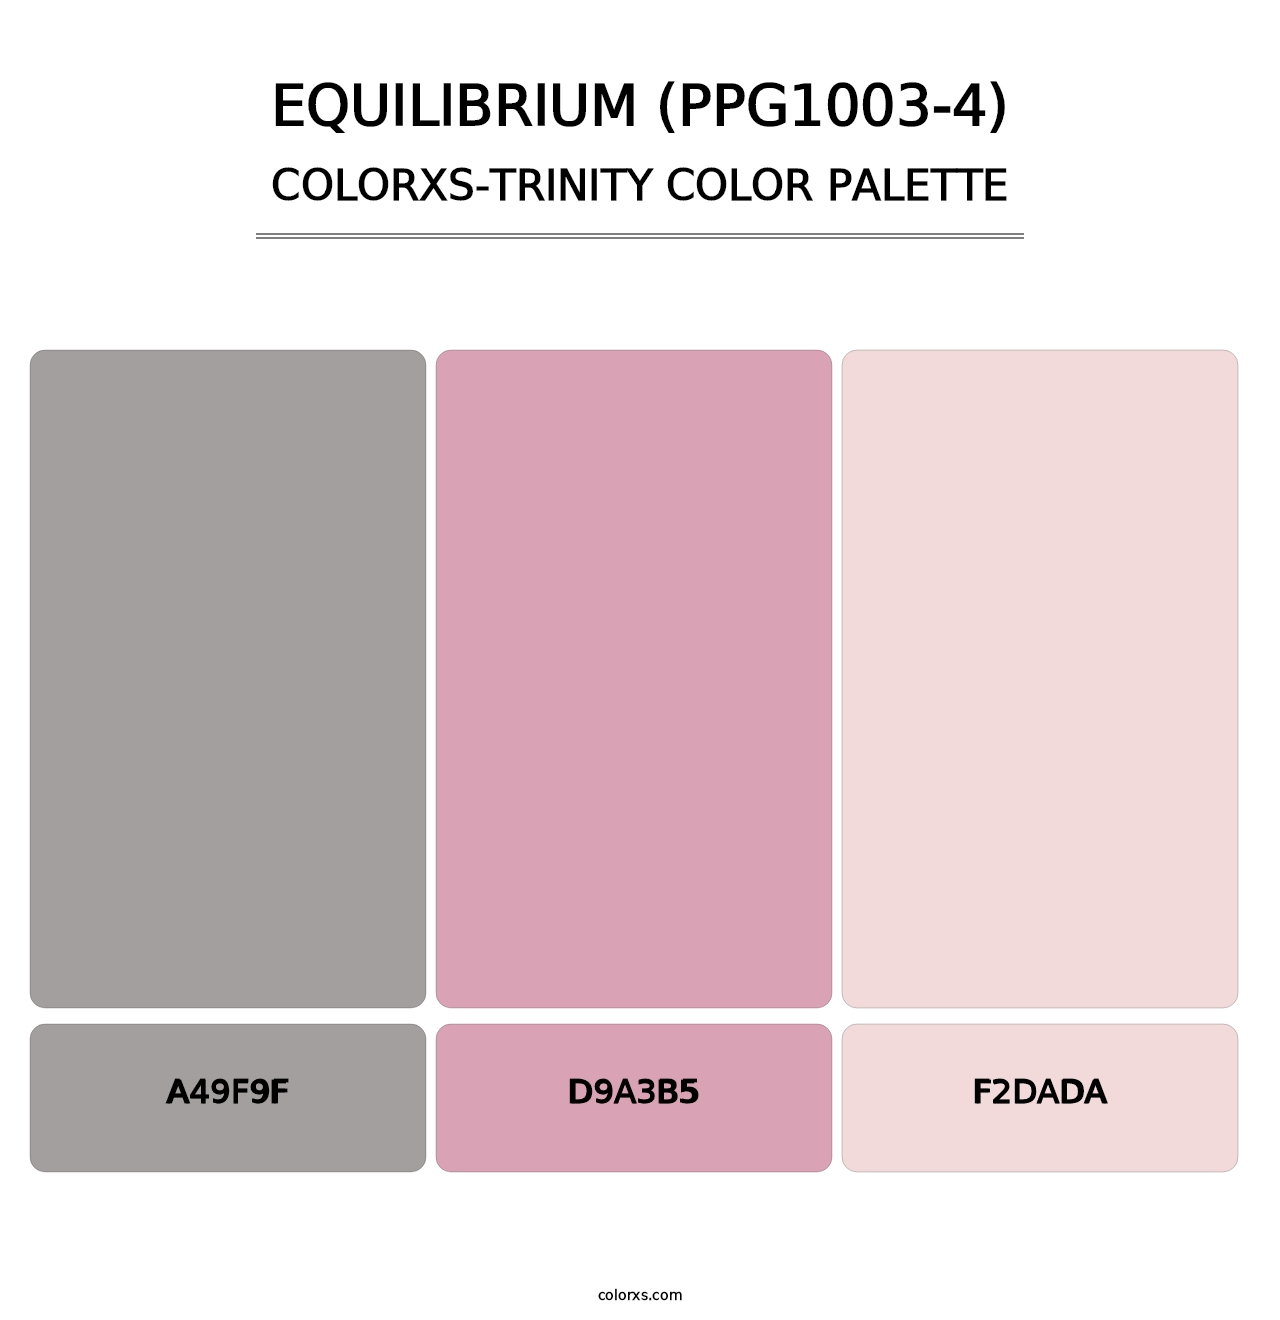 Equilibrium (PPG1003-4) - Colorxs Trinity Palette